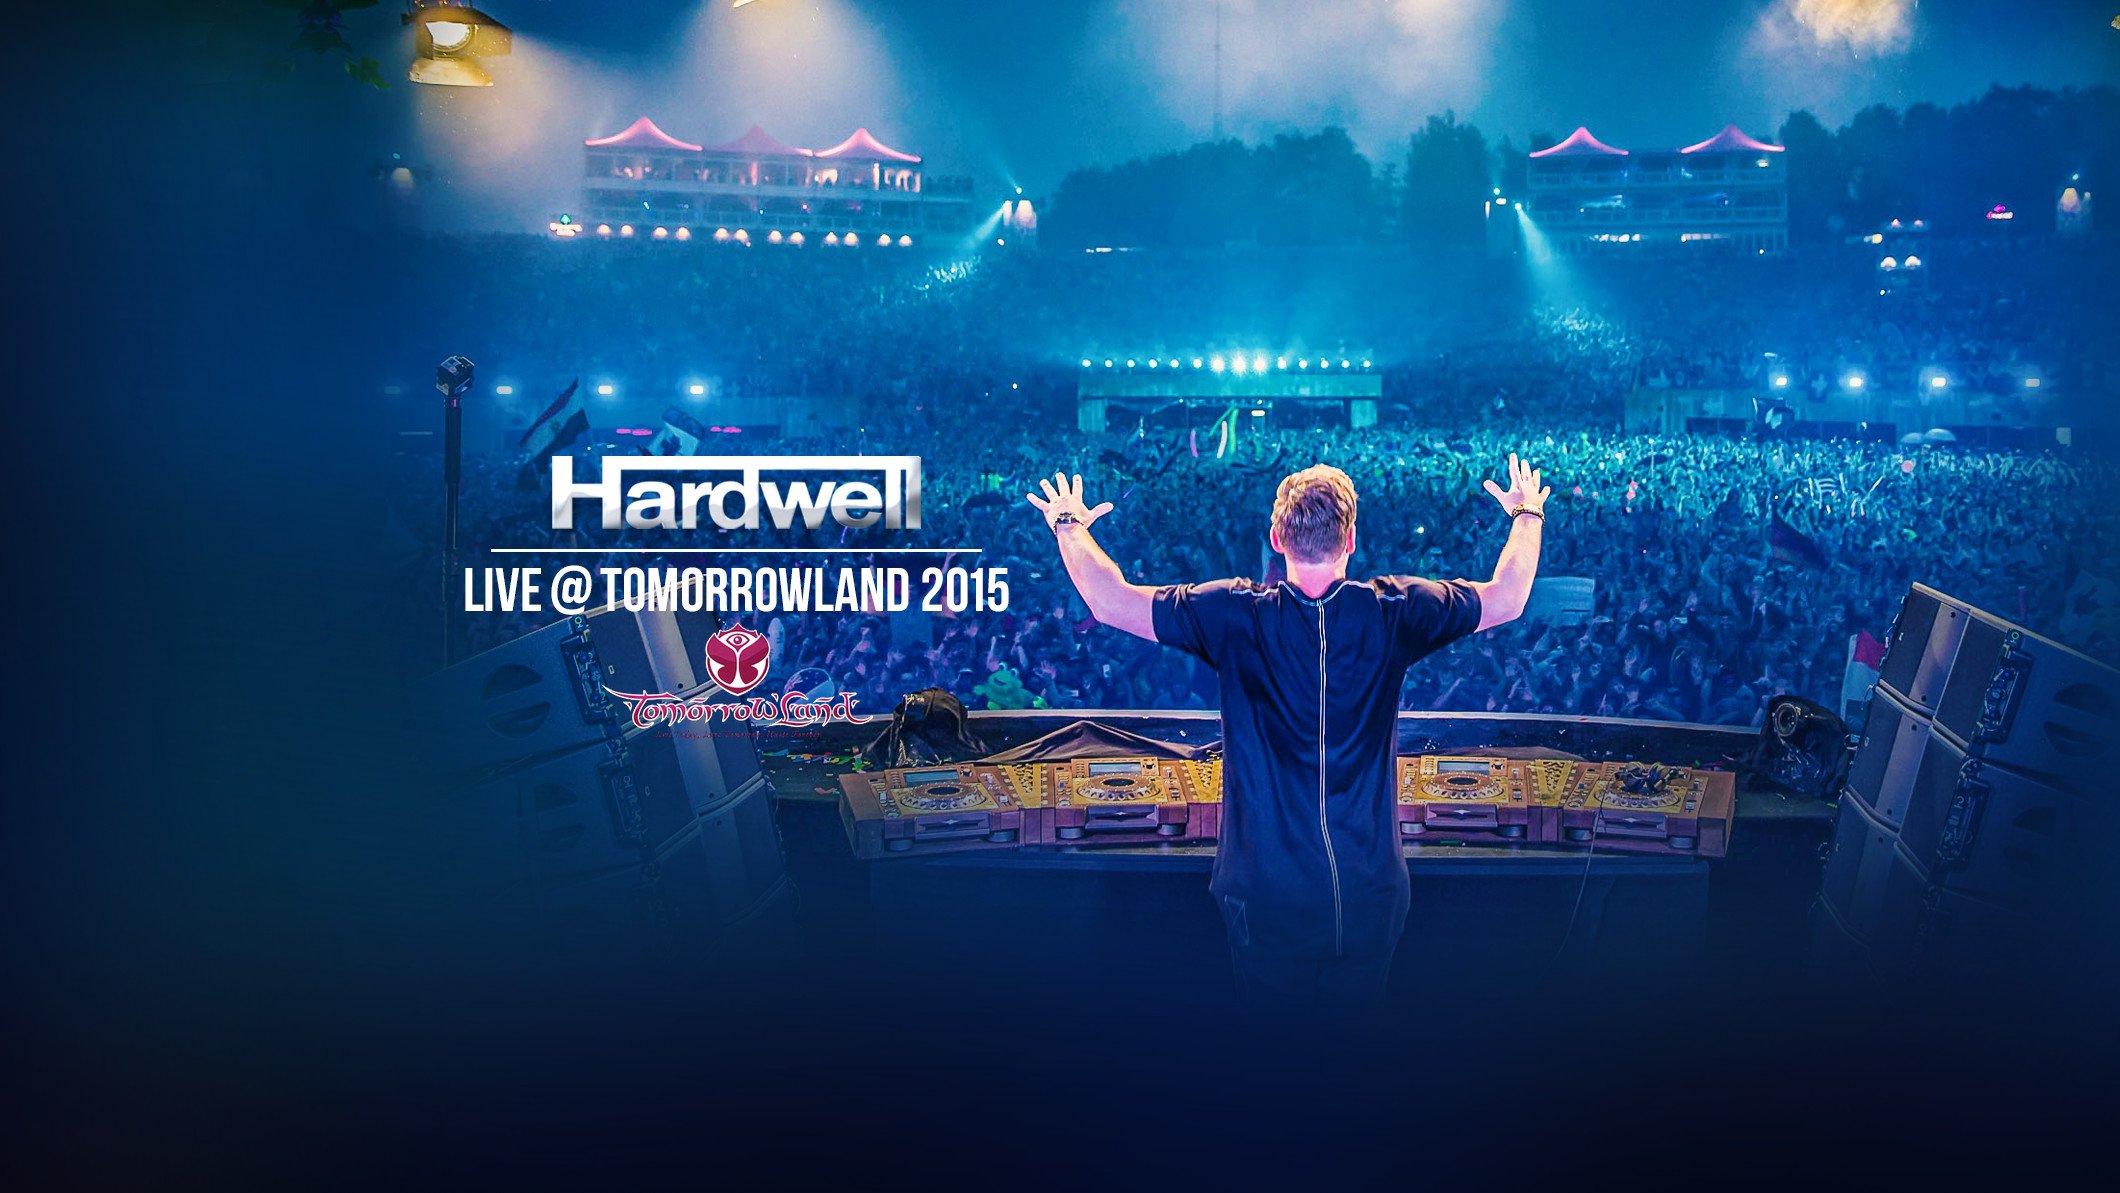 Hardwell Live Tomorrowland Full HD Wallpaper And